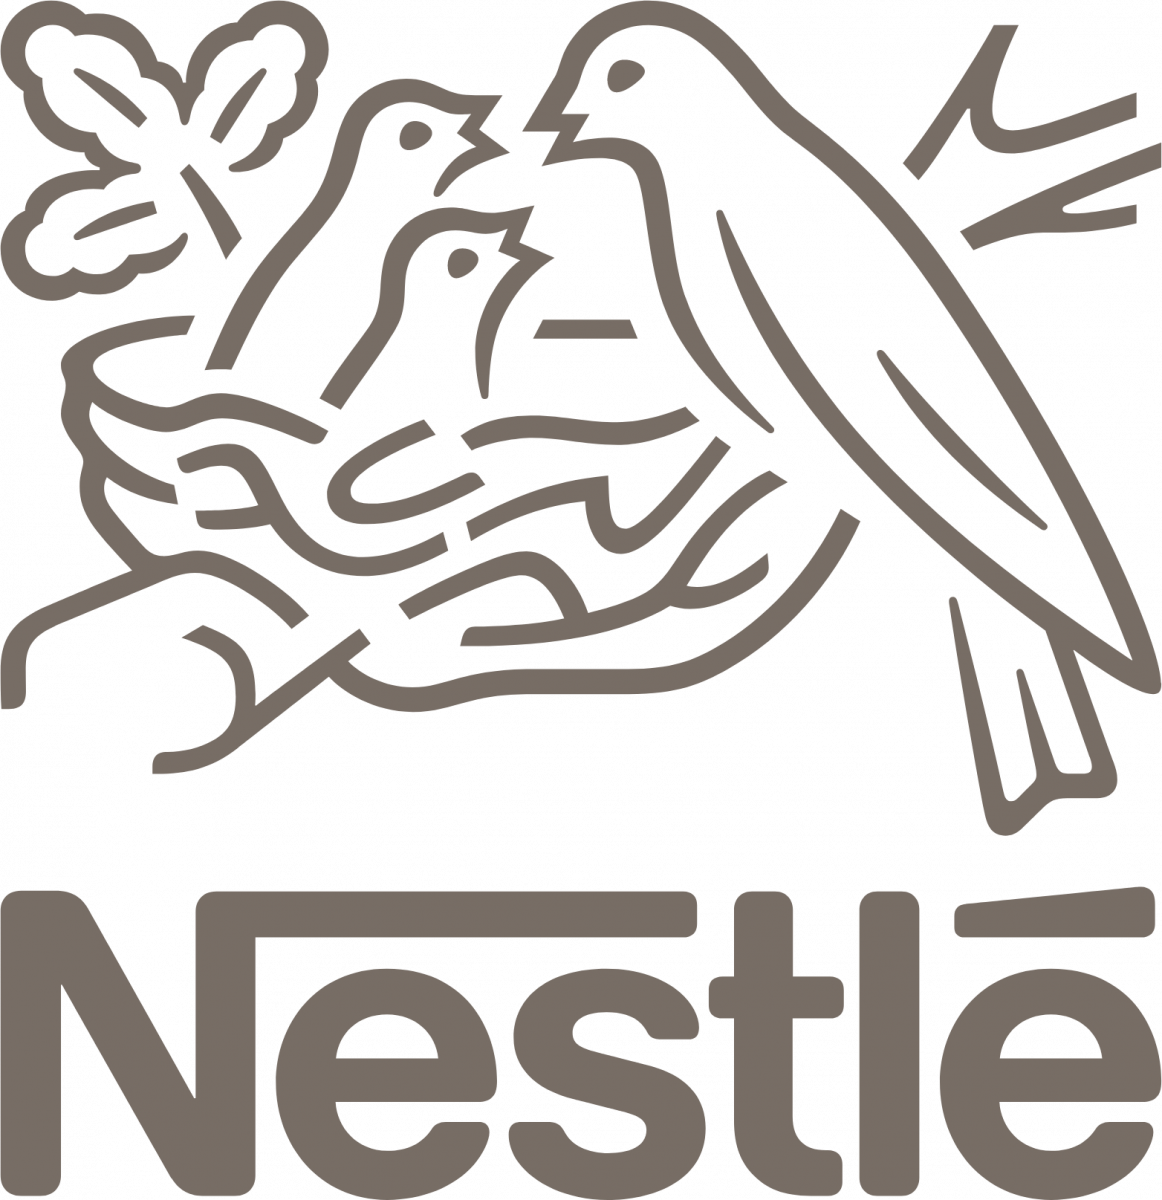 Nestle it companies in Switzerland